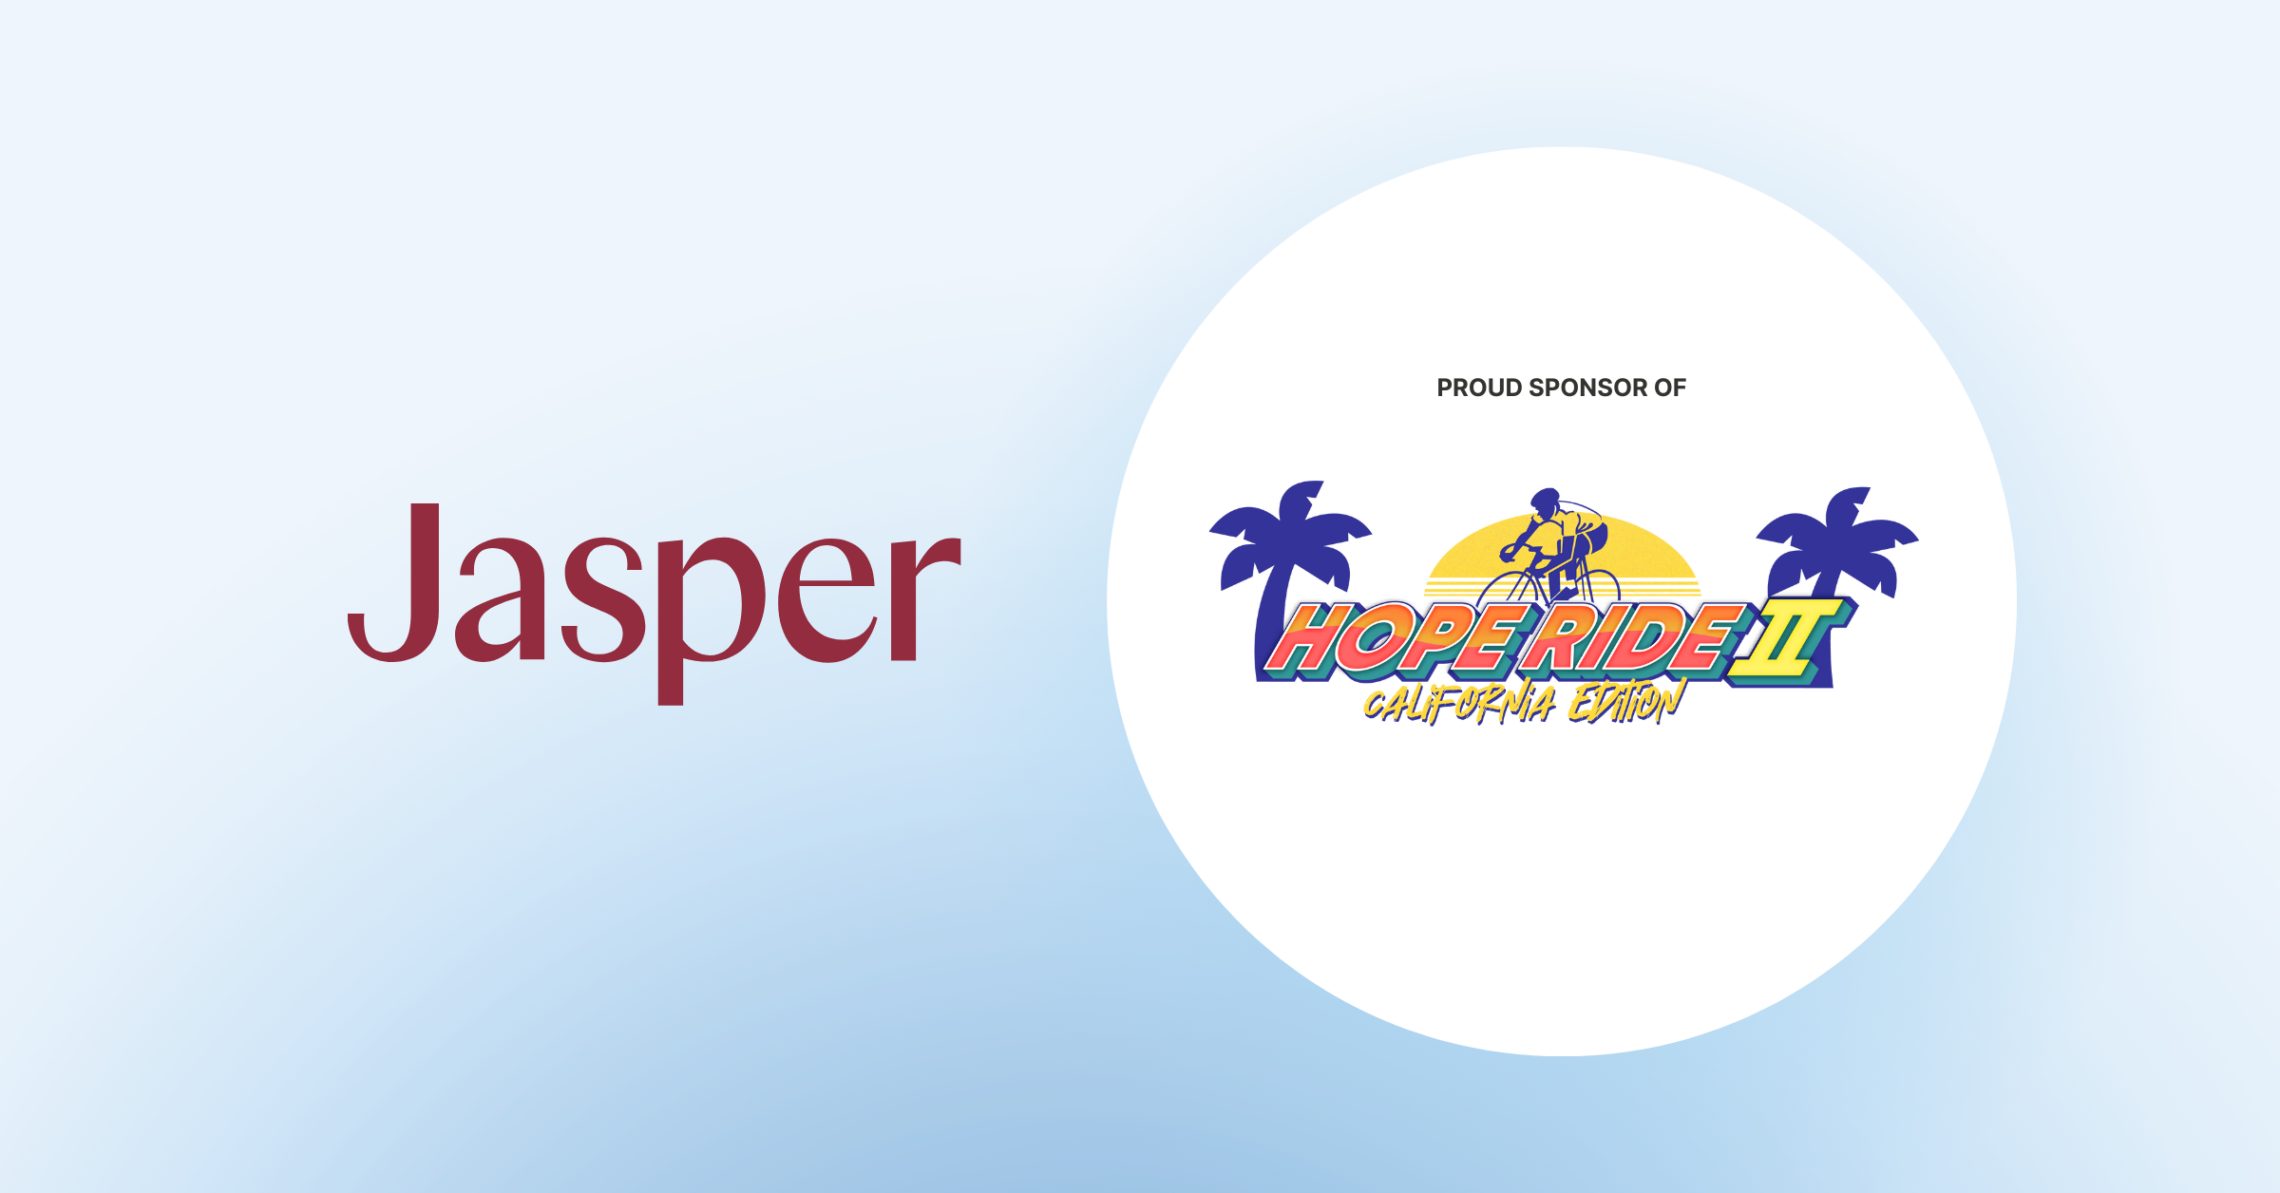 Jasper logo with Proud Sponsor Of subtitle with Hope Ride II California Edition logo